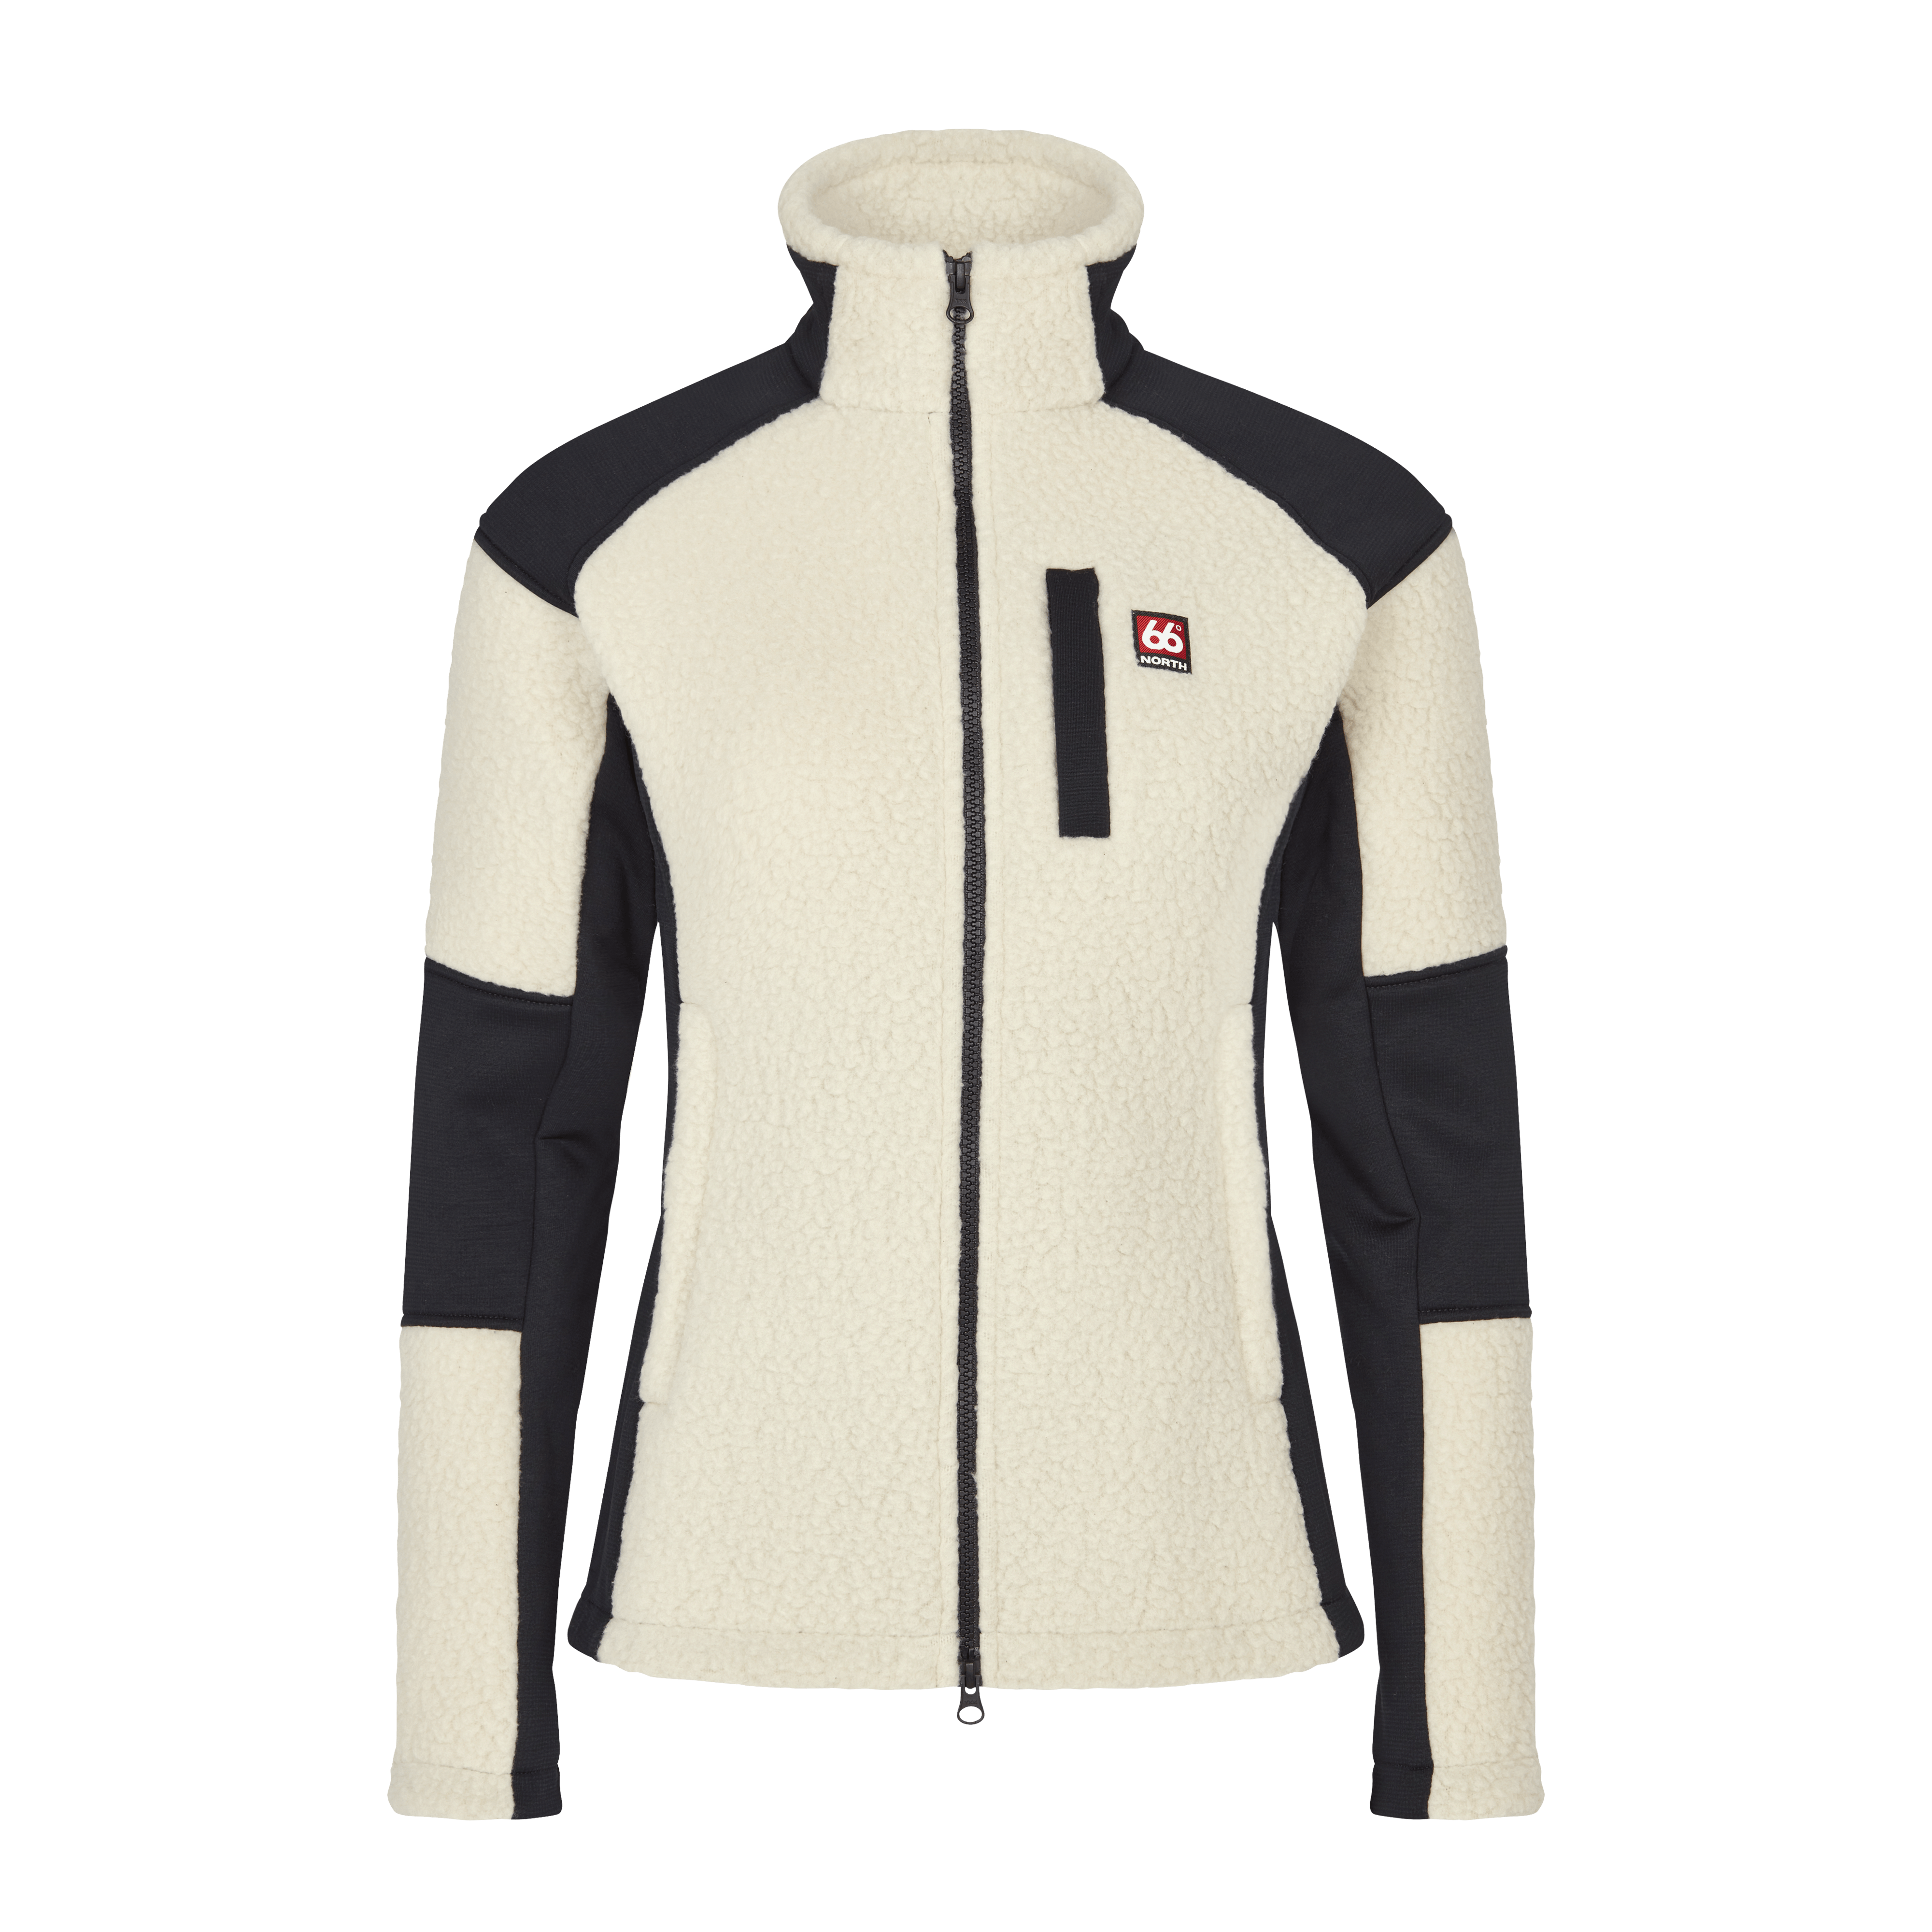 66 North Tindur Fleece Mid-layer Jacket In White Black